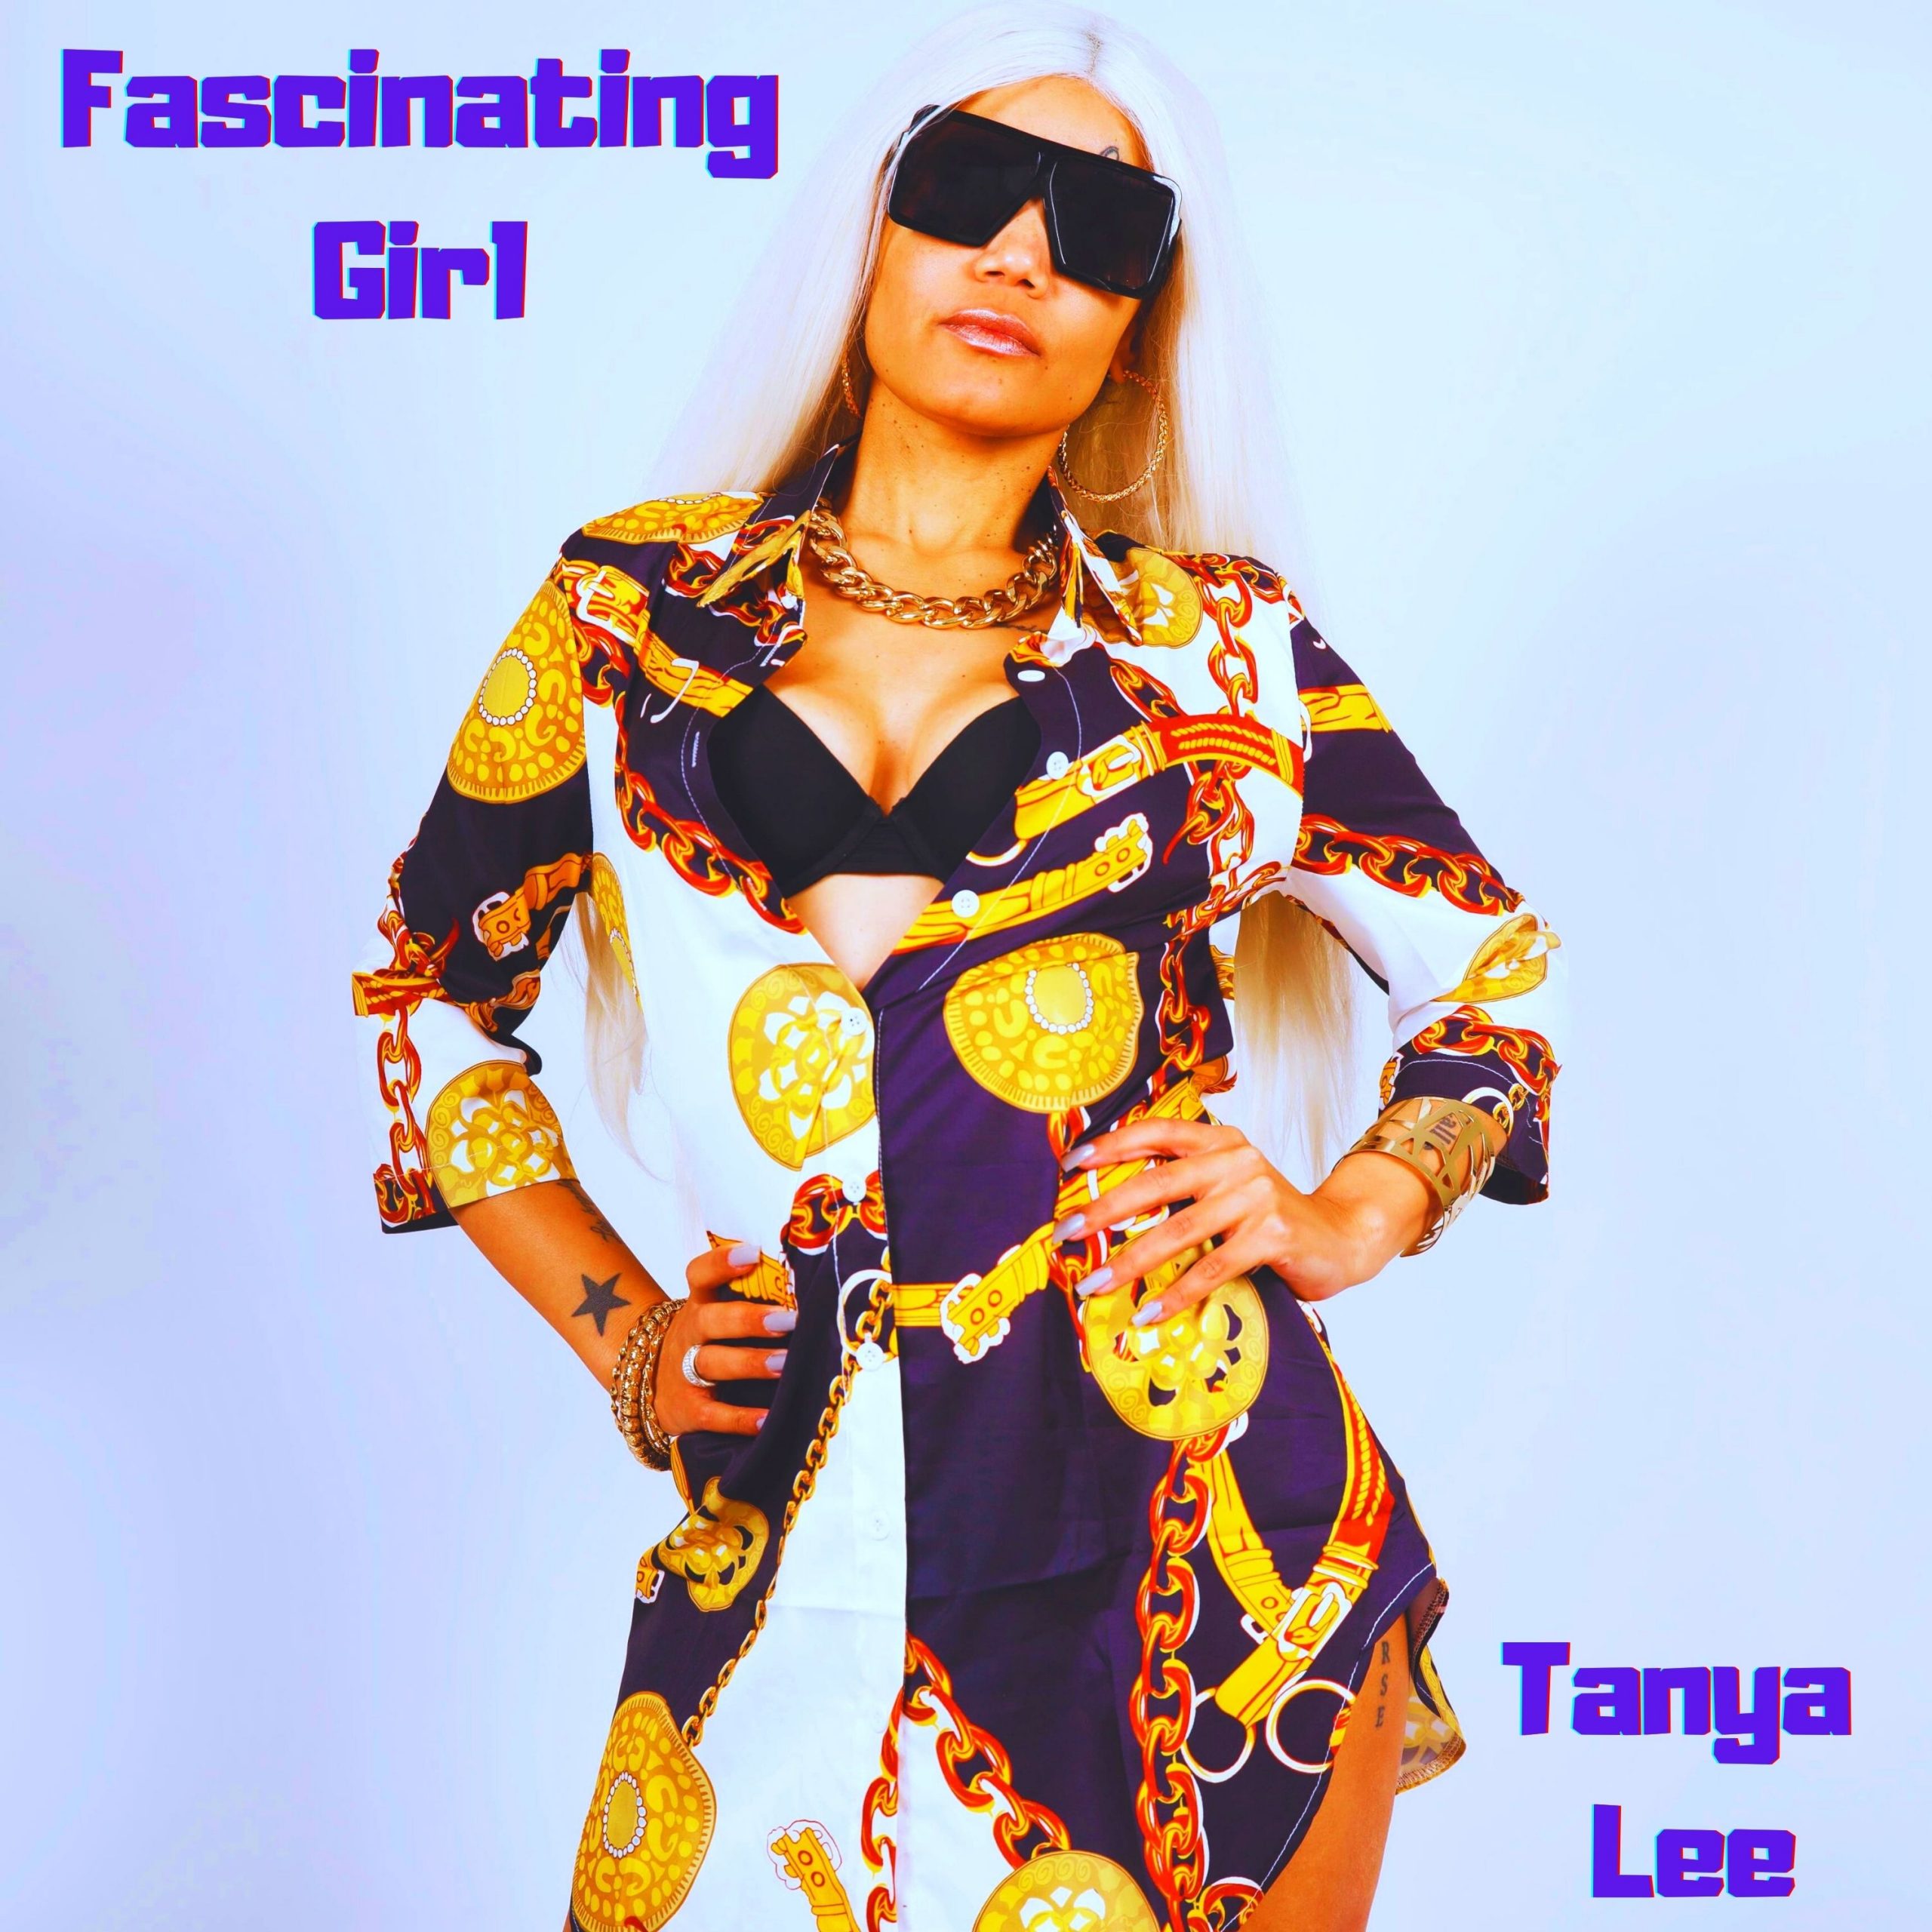 Album di esordio per la cantautrice ed influencer australiana Tanya Lee